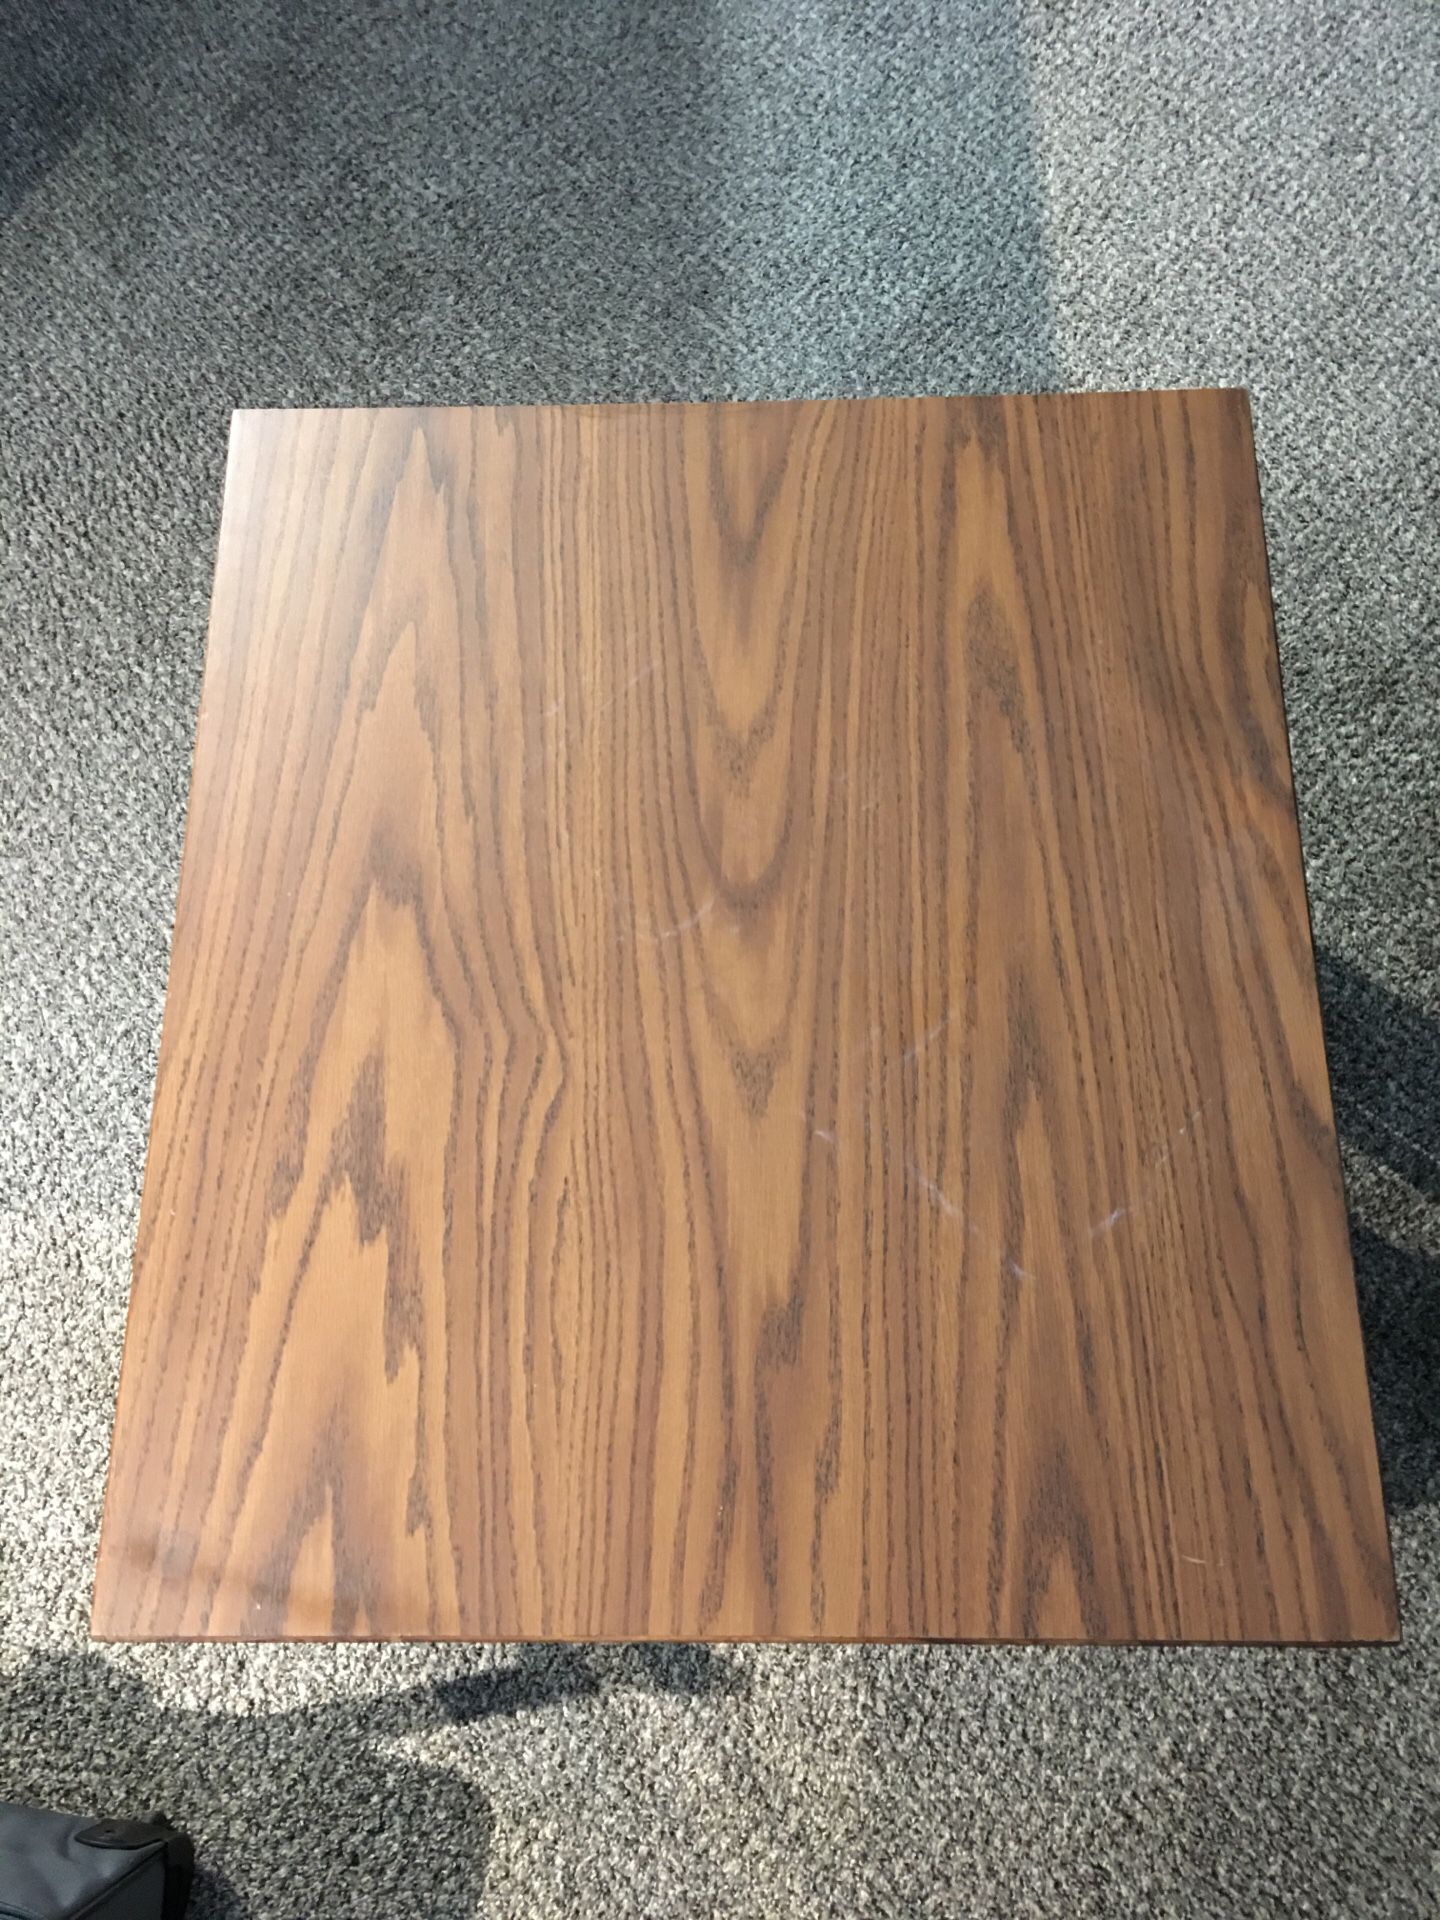 Premium Oak Wood End Table (klaussner)